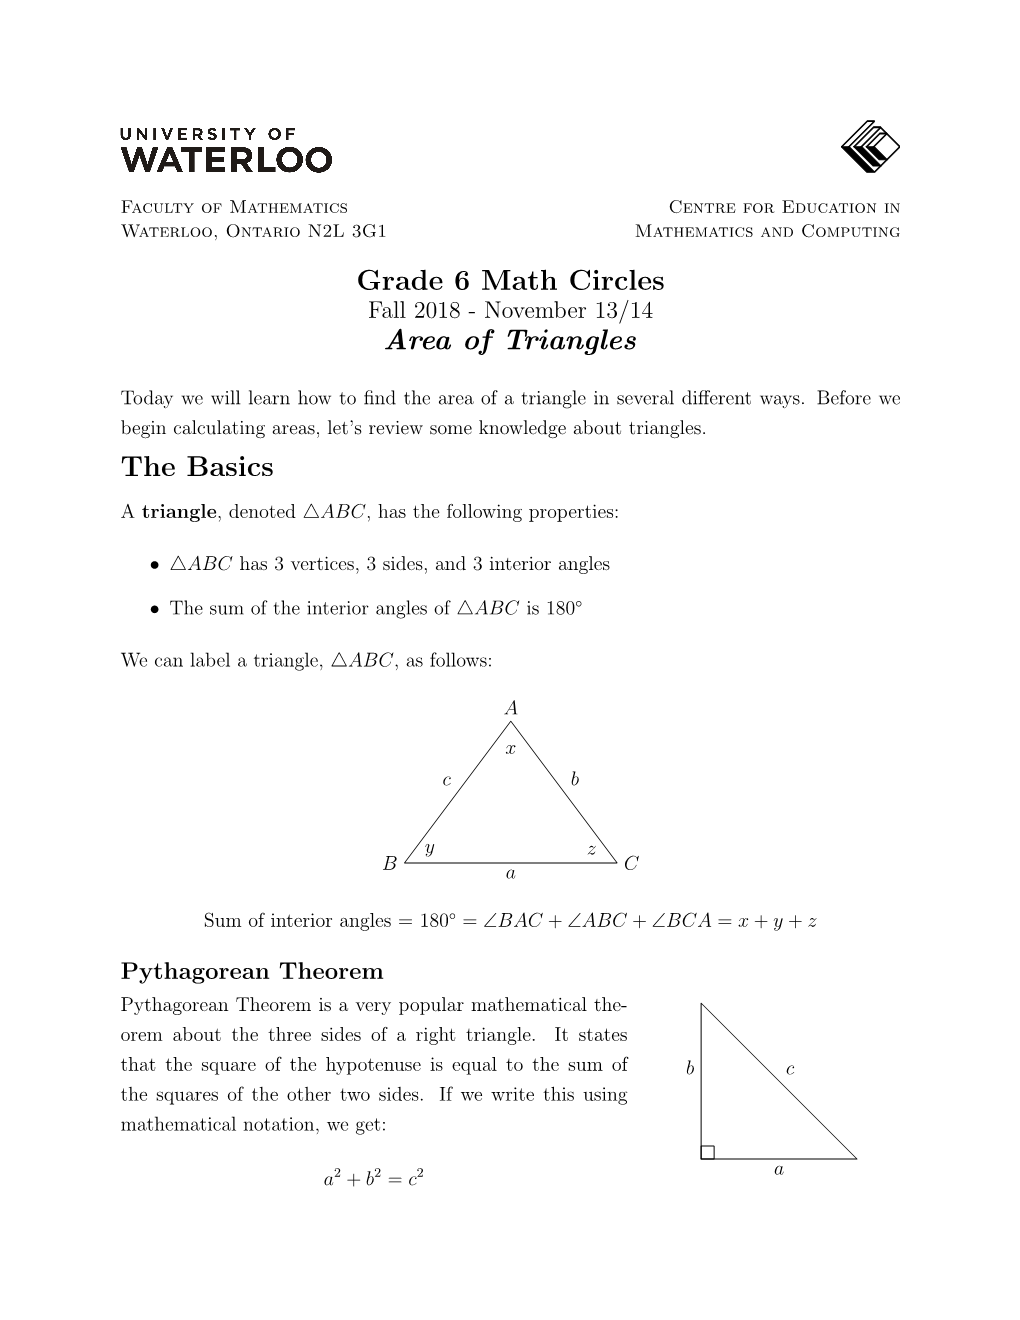 Grade 6 Math Circles Area of Triangles the Basics